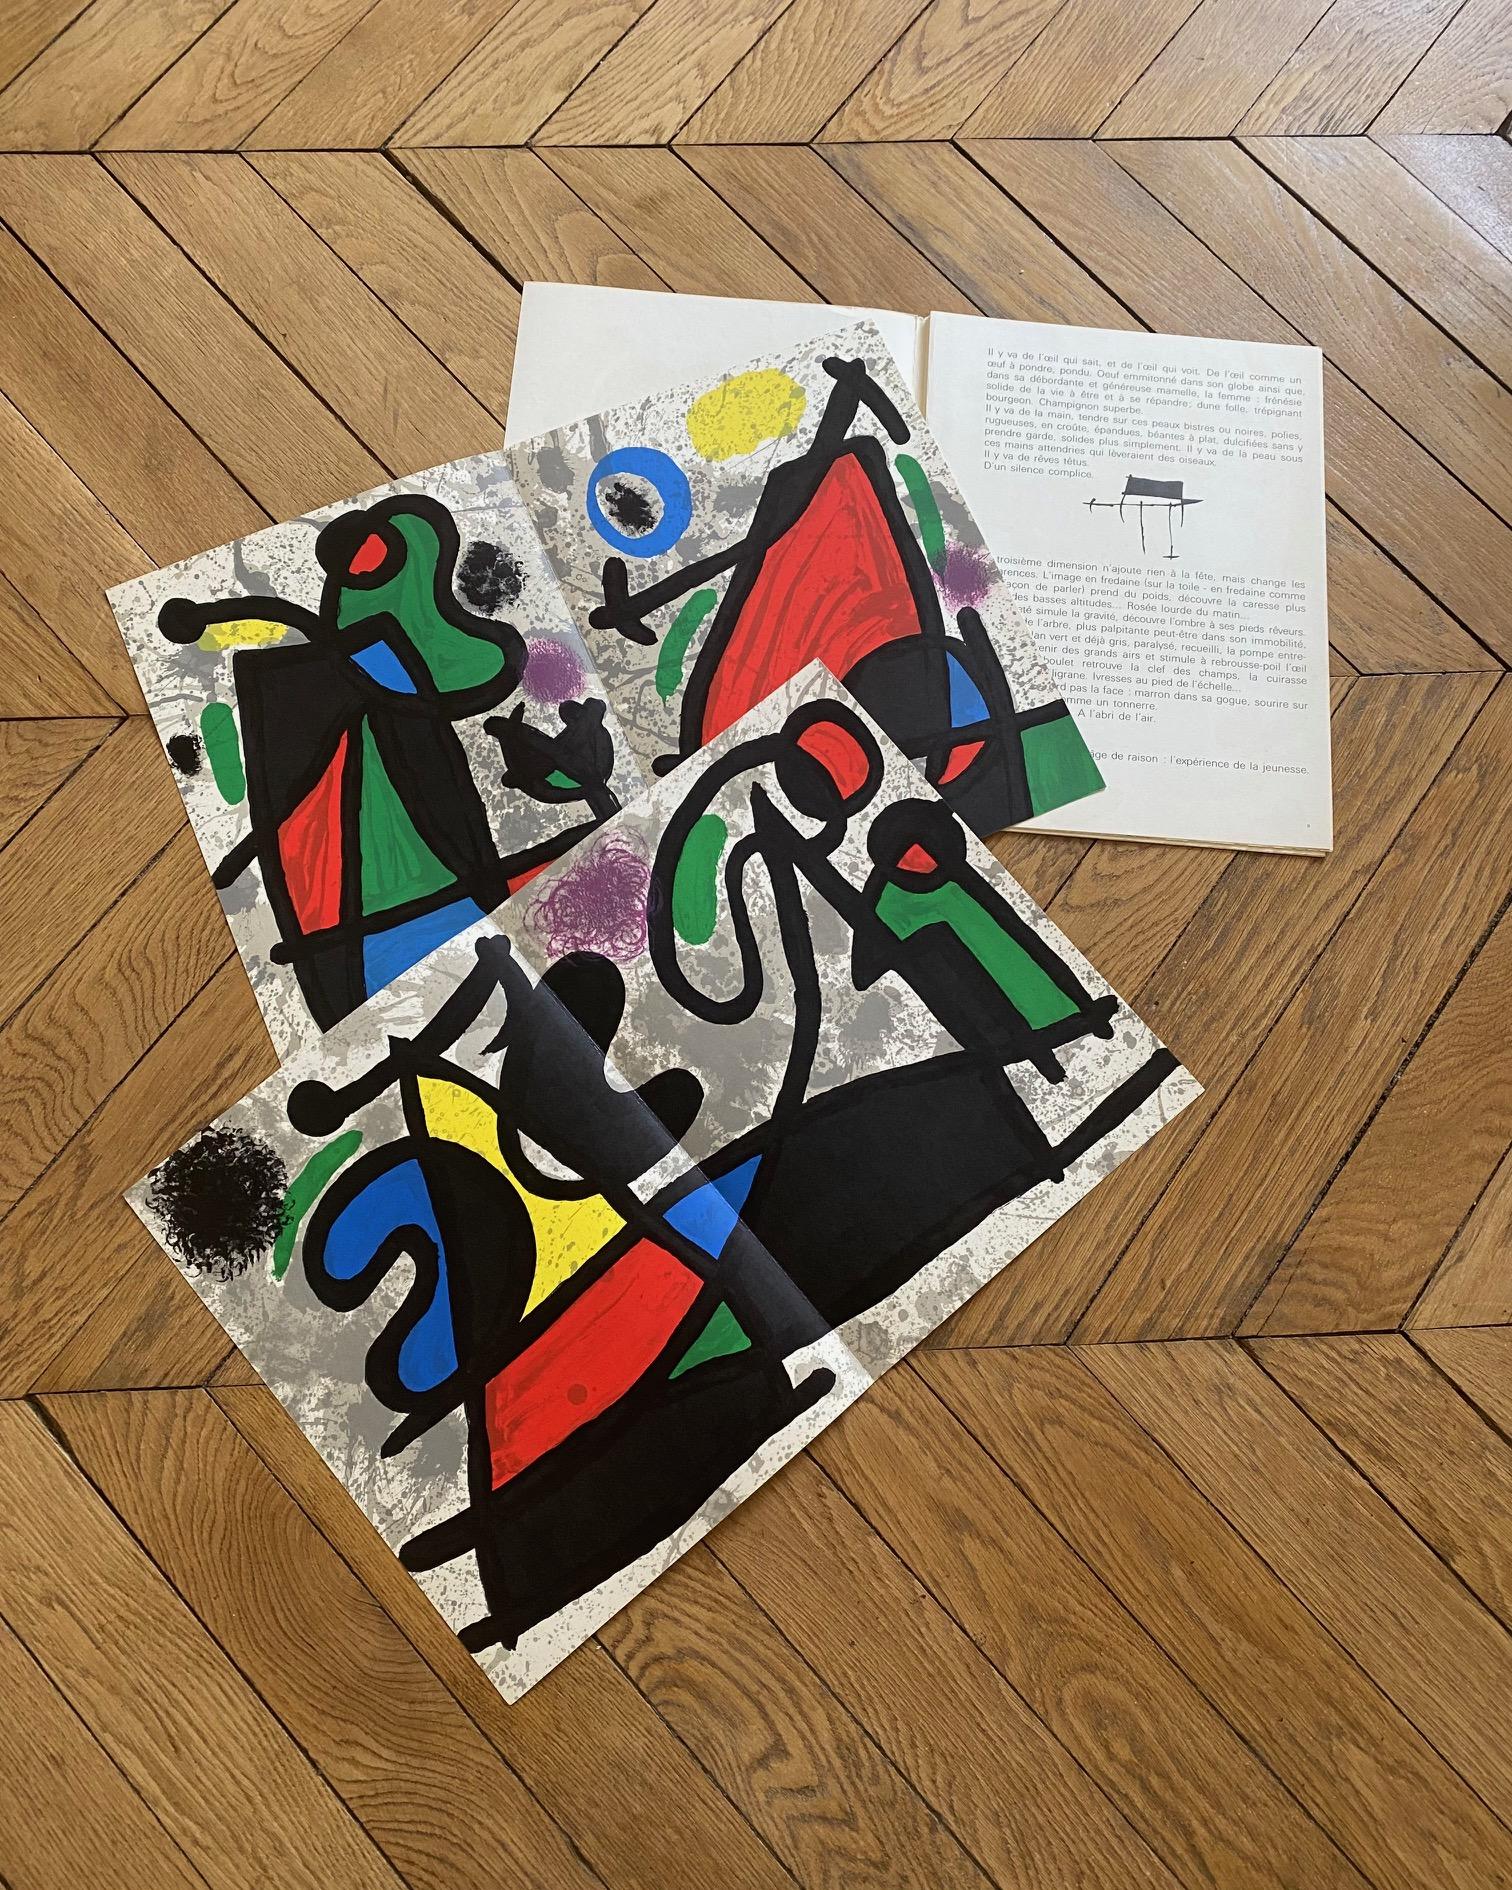 Papier Joan Miro 